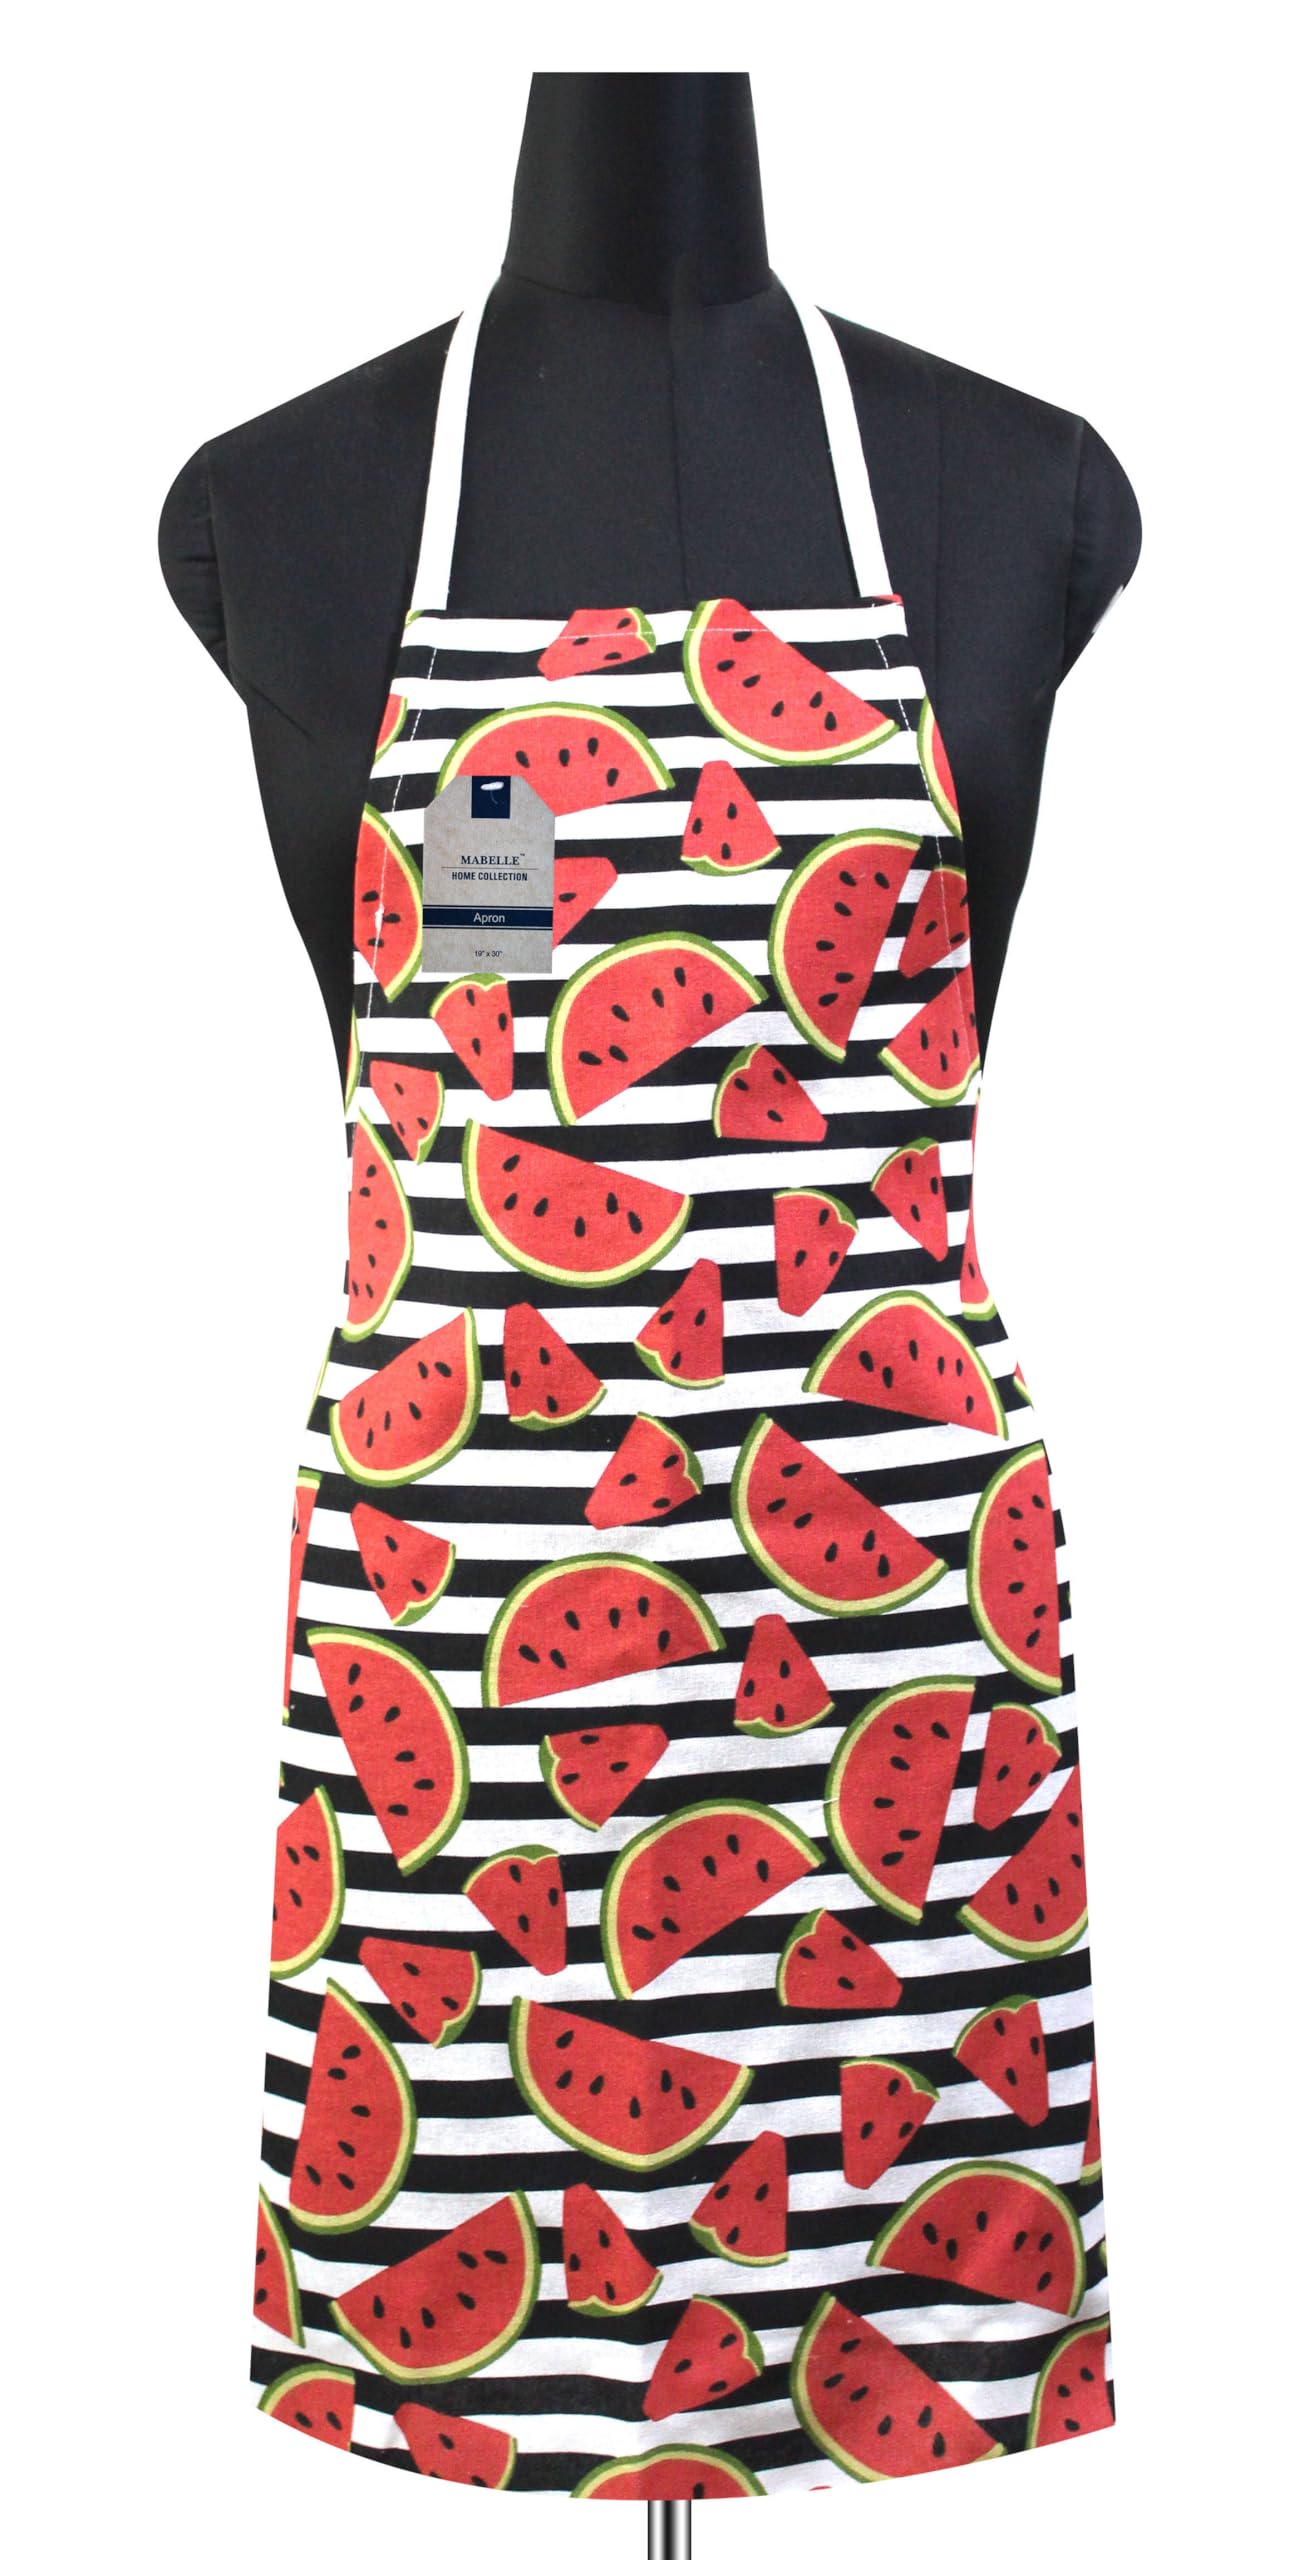 Set of 4, 100% Cotton Watermelon Design pom-pom Kitchen Towels Size: 16 x 28 Inch for Wedding, Baby Shower, Home Décor.